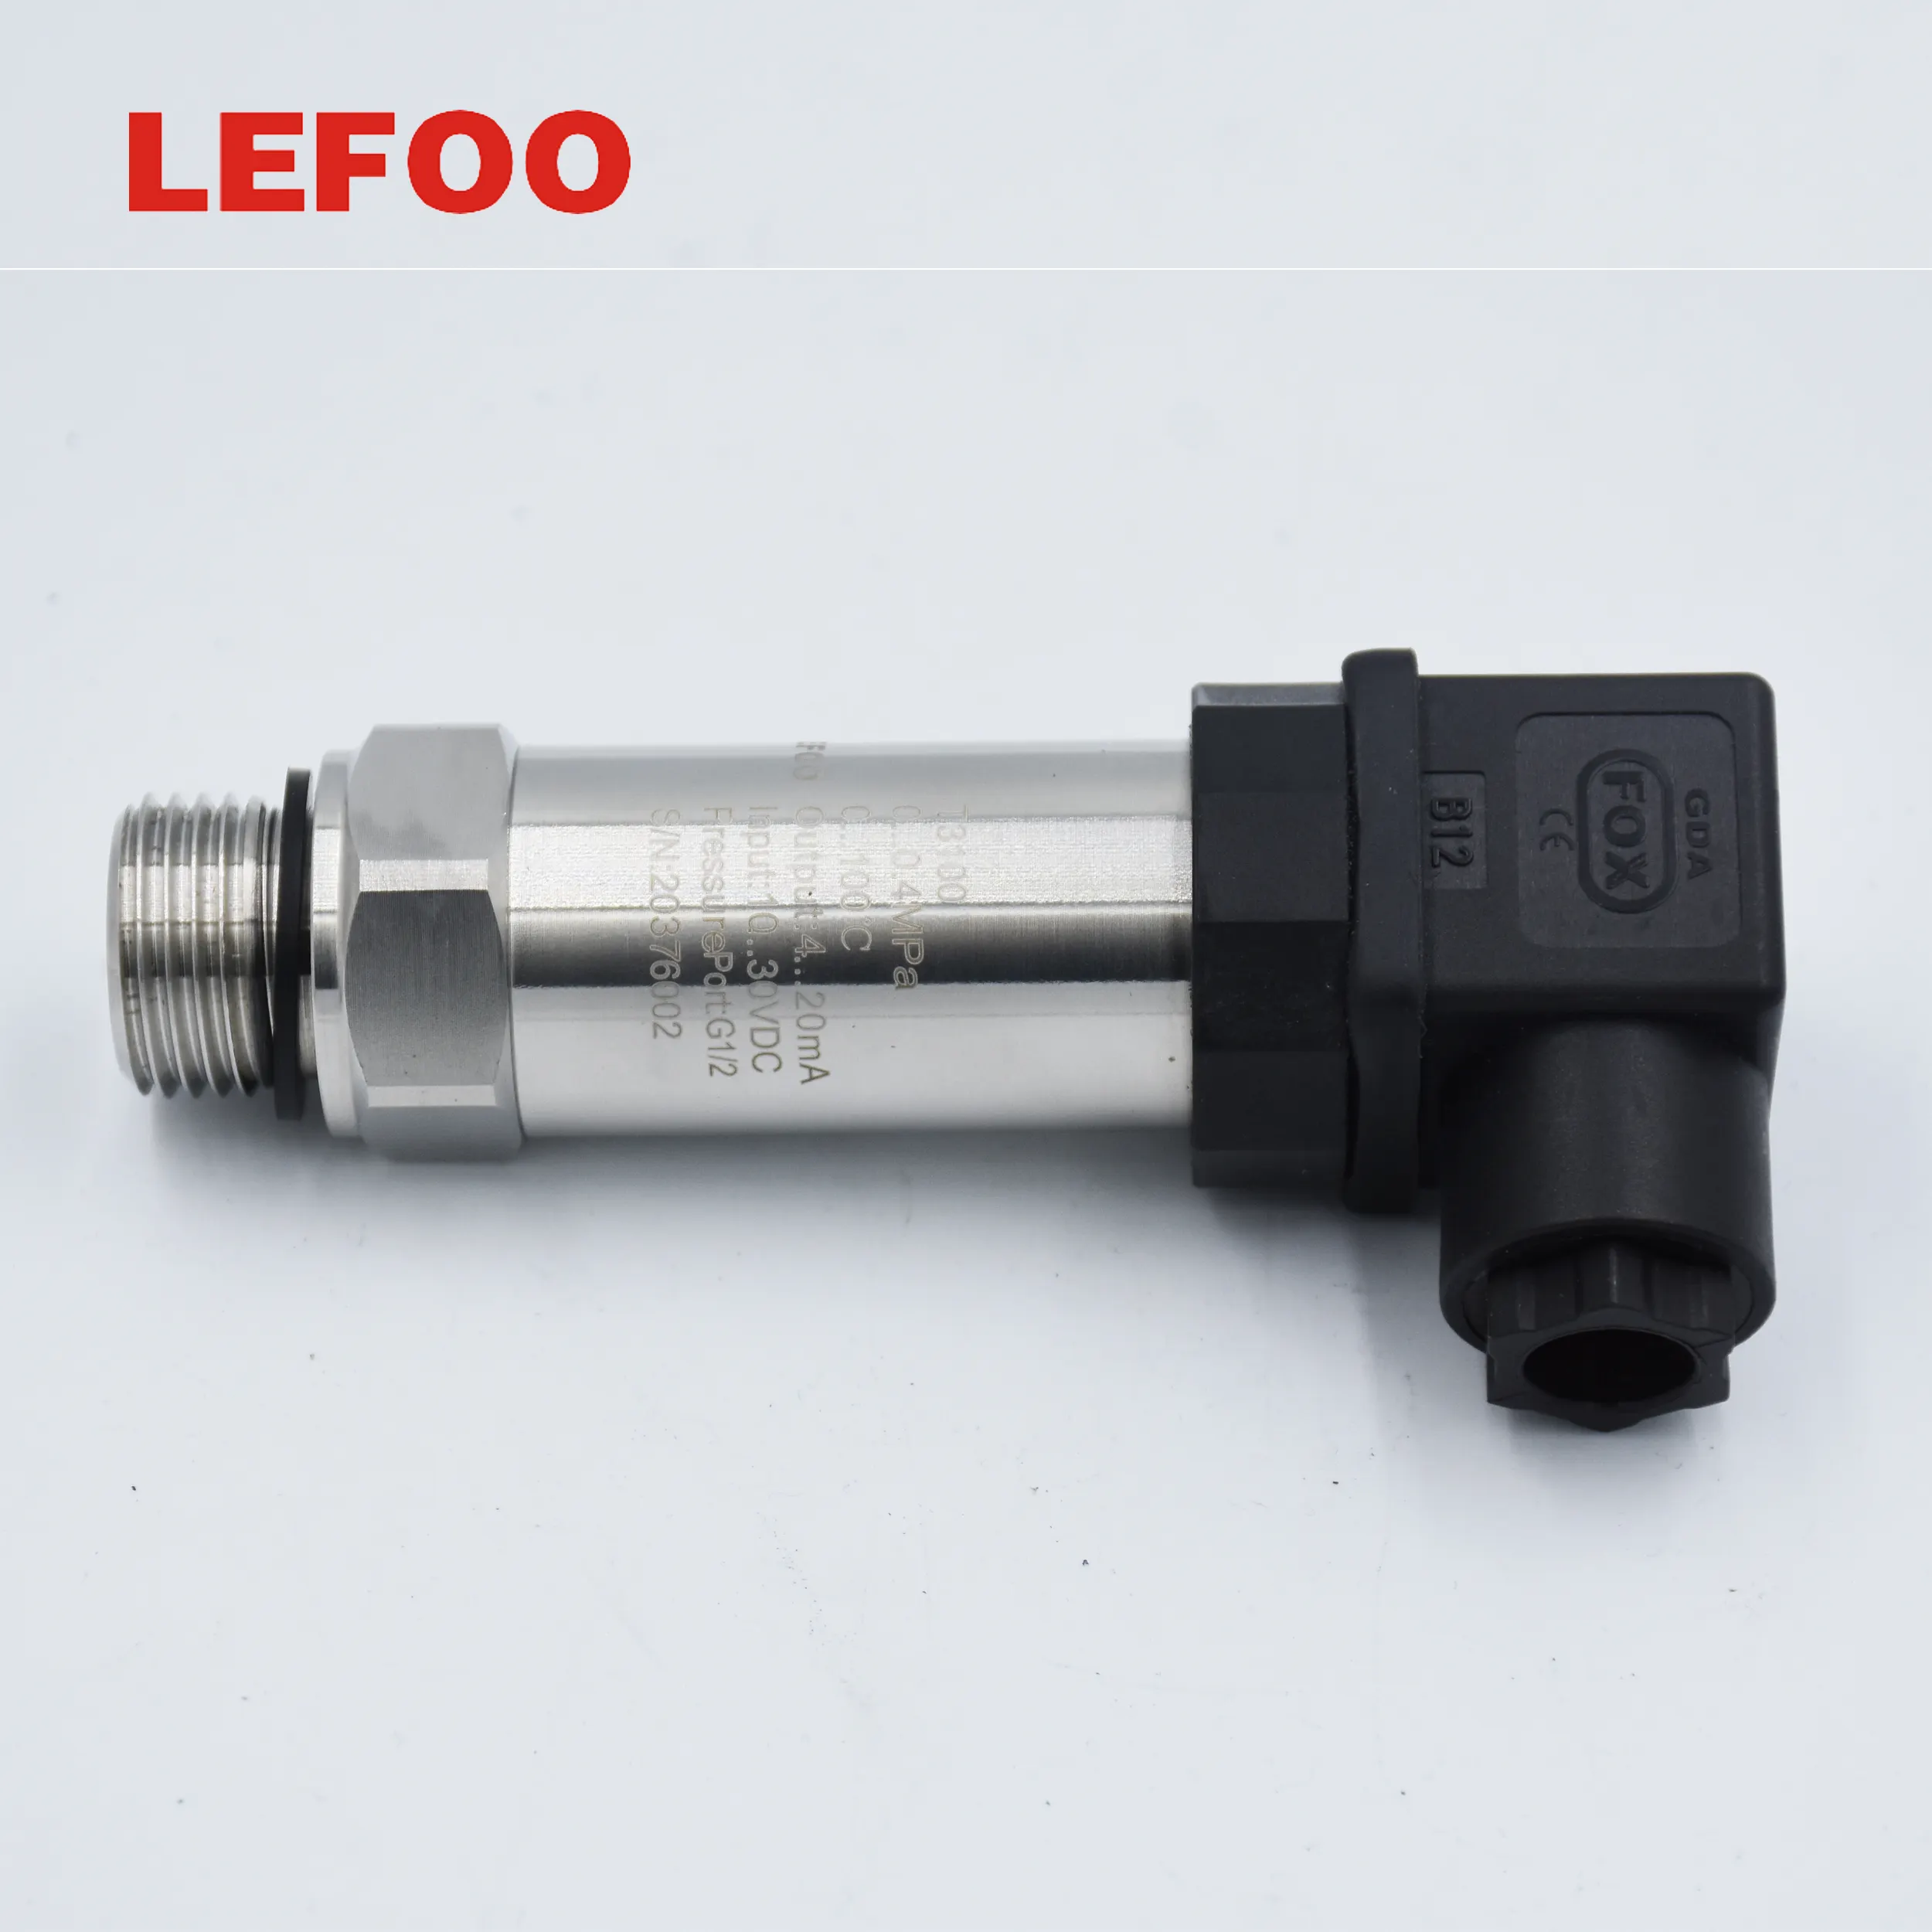 LEFOO LFT3100 Diffusion Oil-filled Silicon Core Pressure Sensor Temperature And Pressure Integrated Transmitter